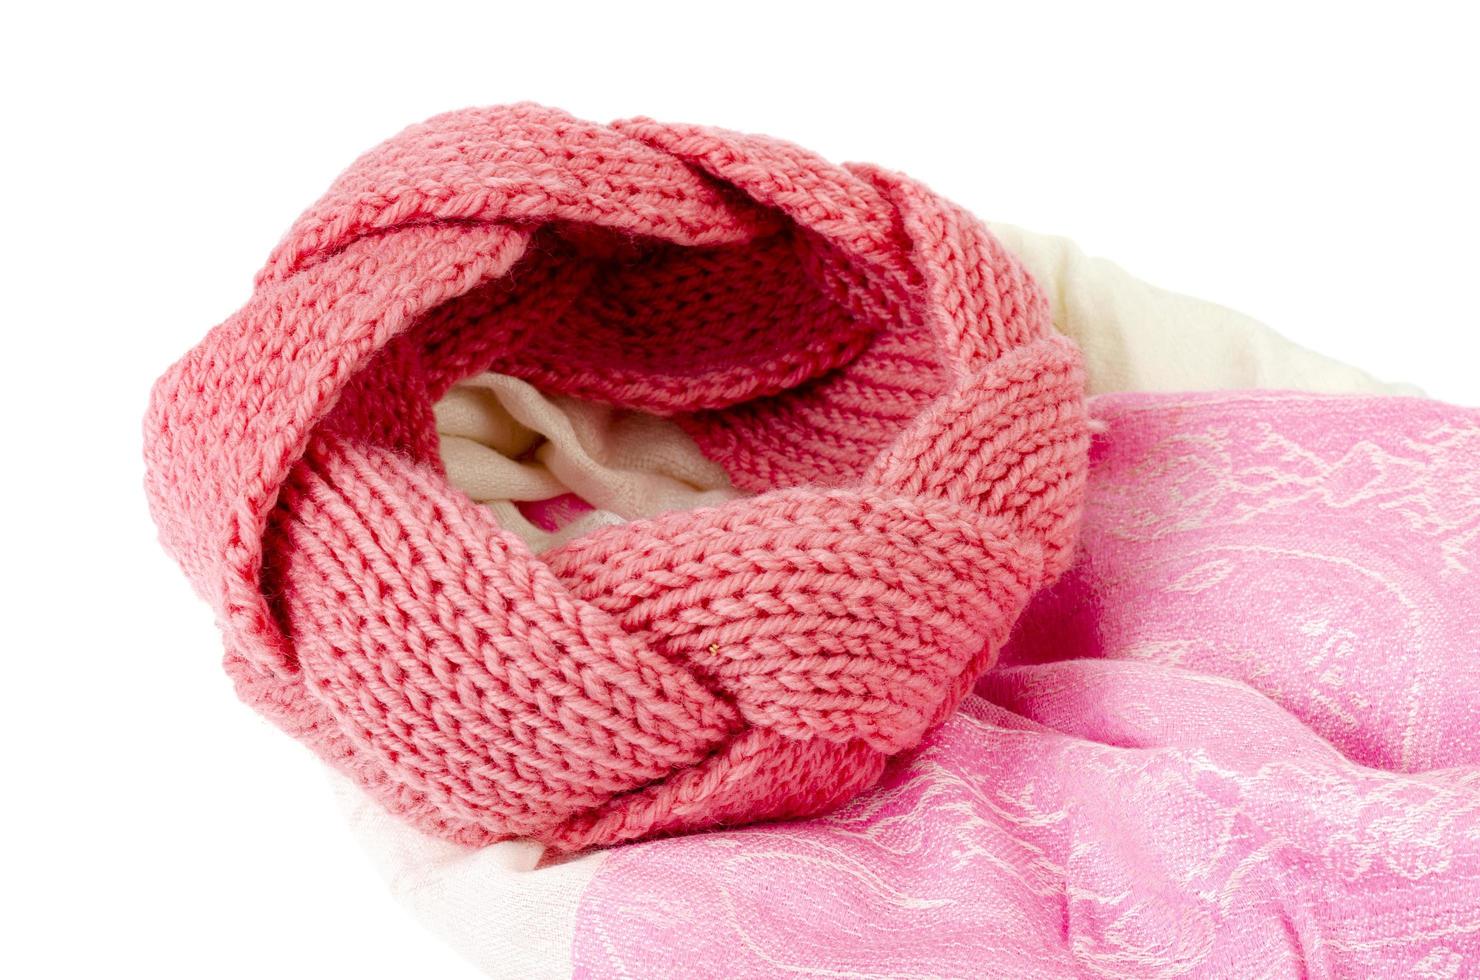 Beautiful pink headband, knitted from threads. Studio Photo